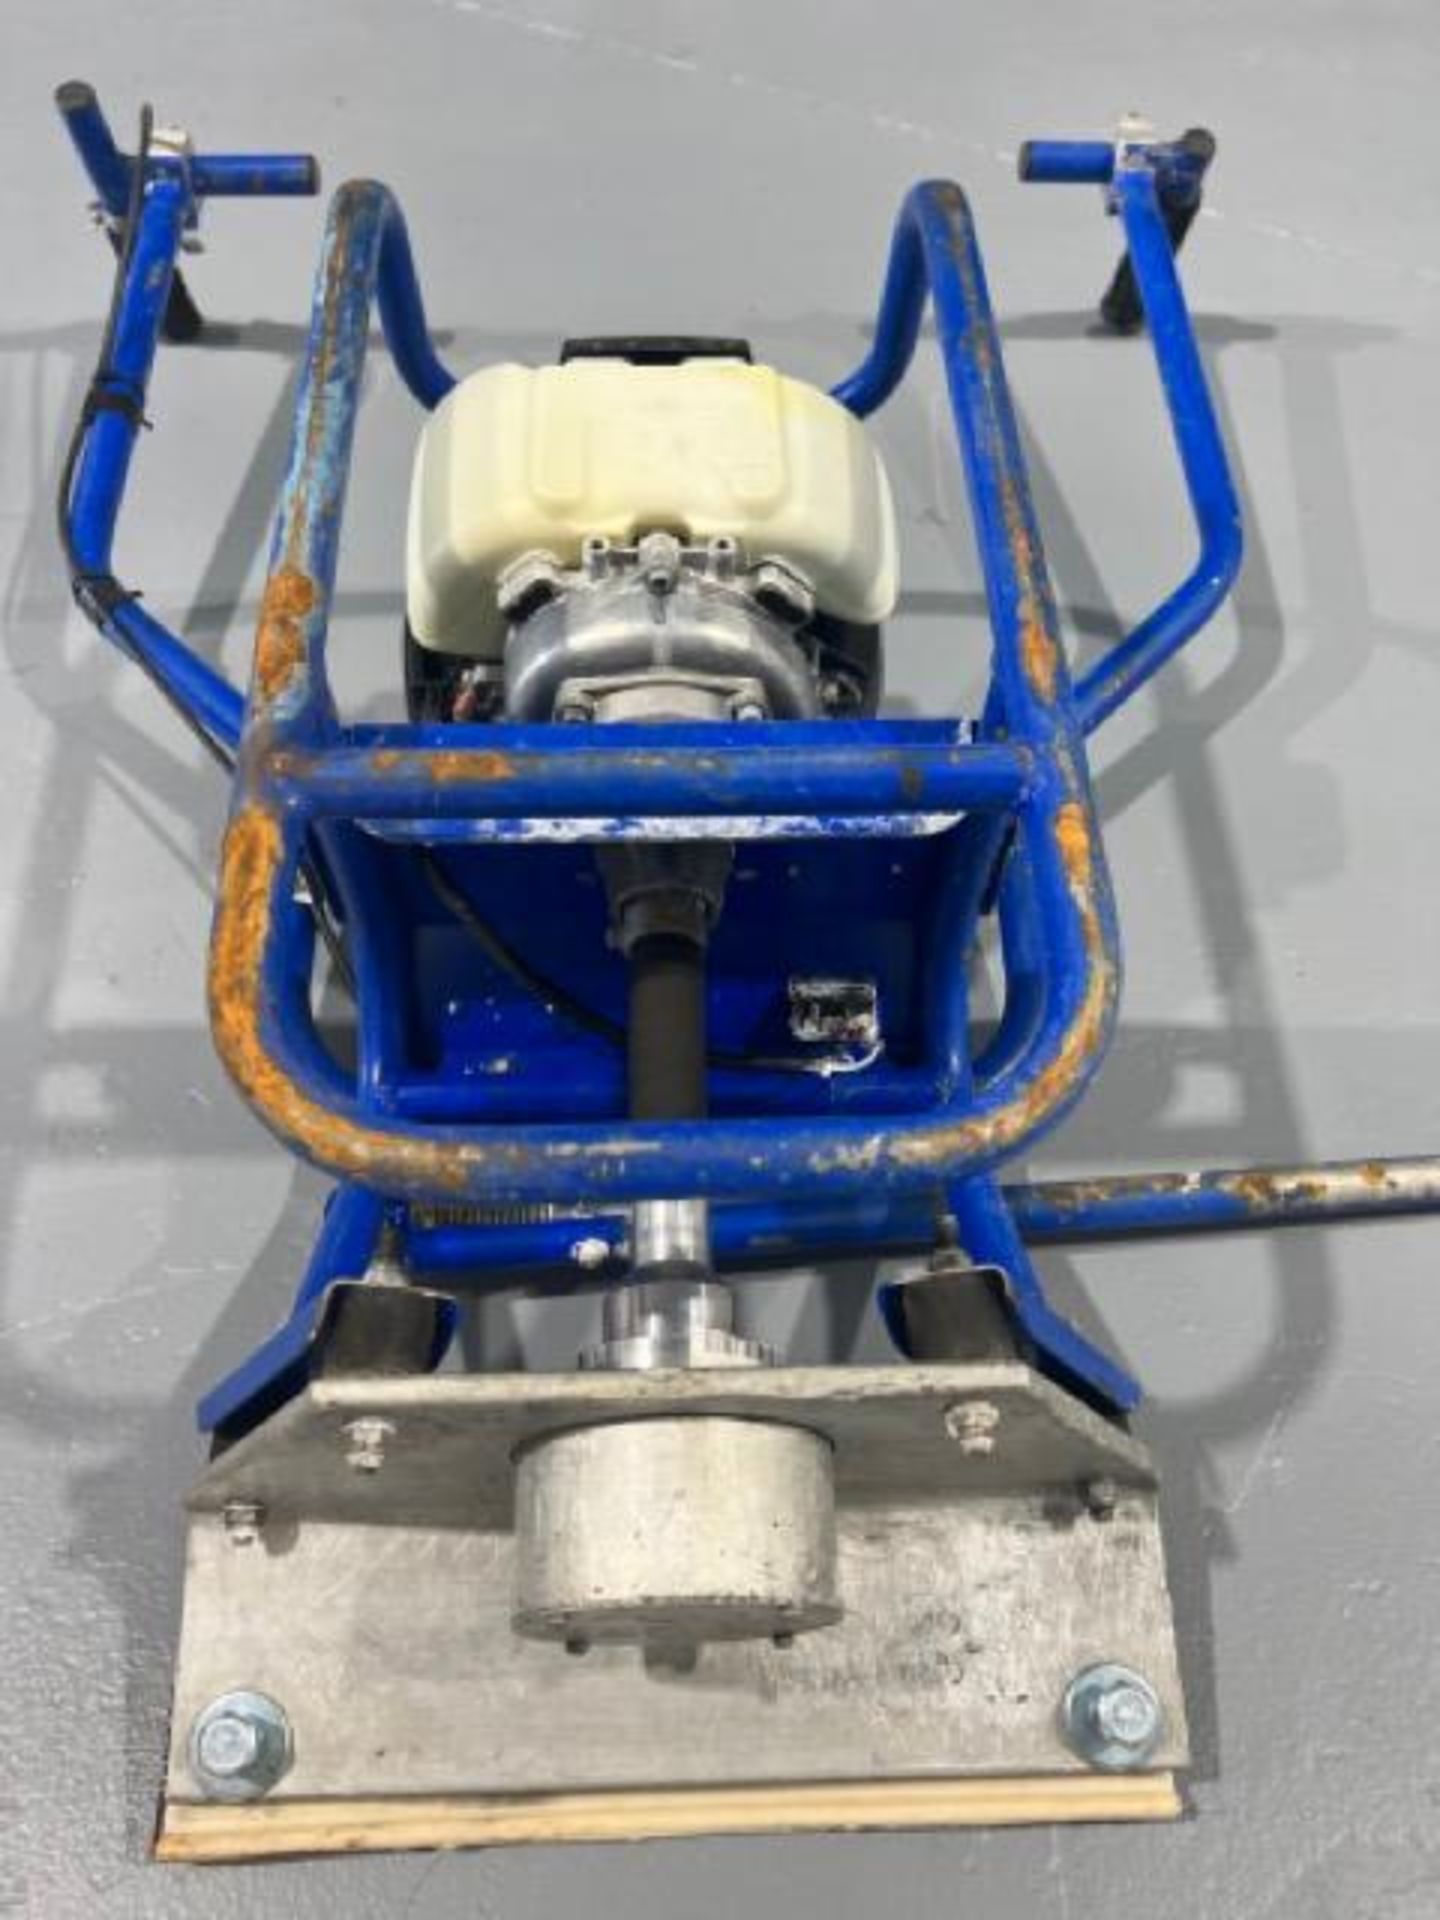 Marshalltown power screed head with Honda engine - Image 4 of 4